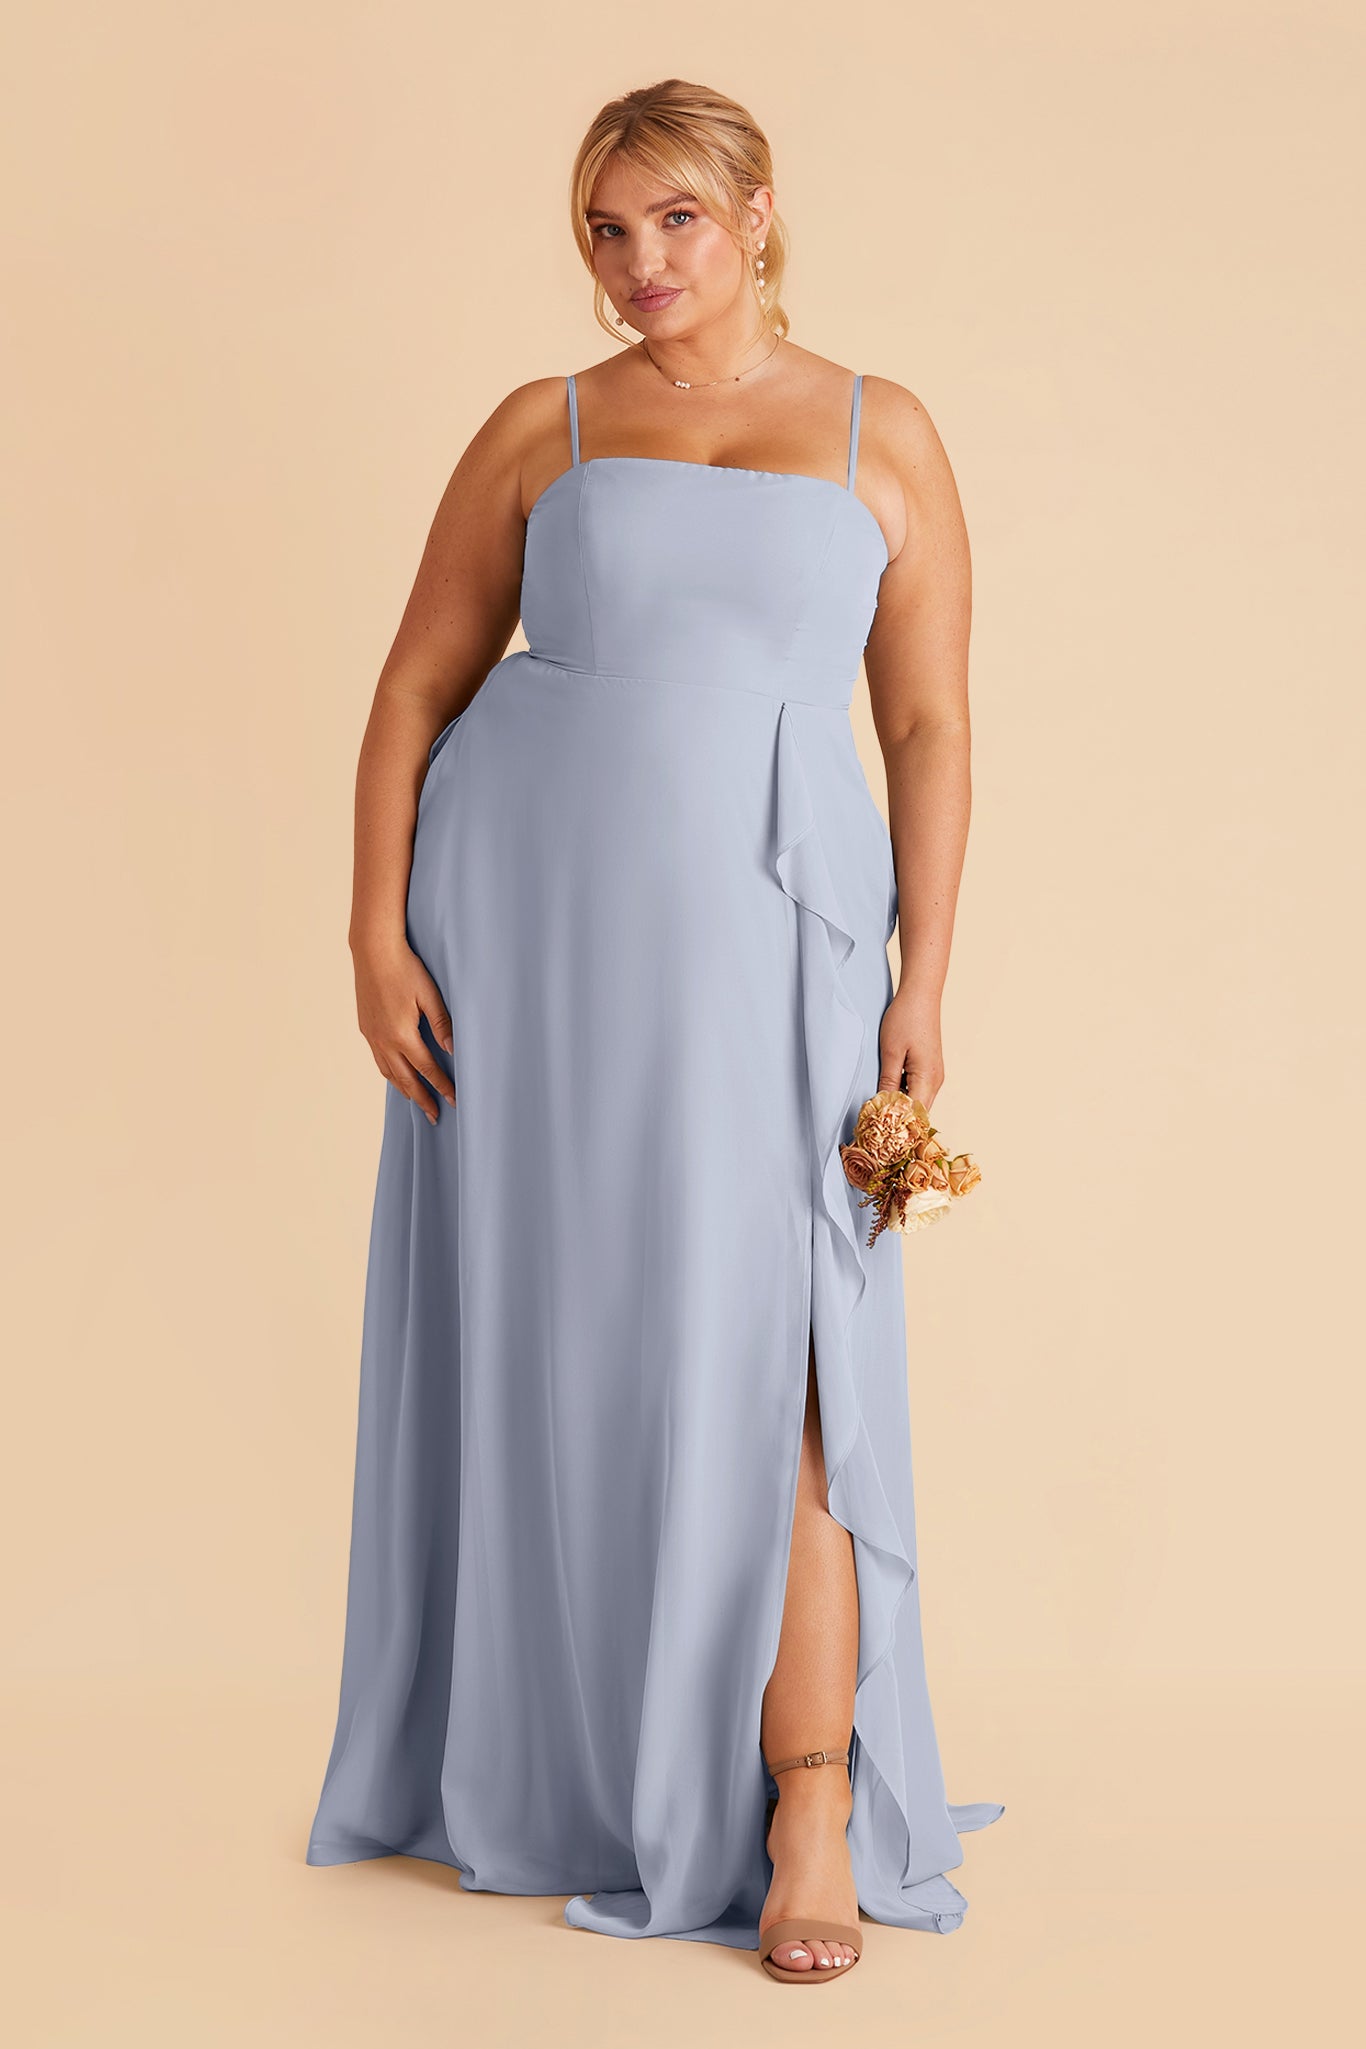 Dusty Blue Winnie Convertible Chiffon Dress by Birdy Grey